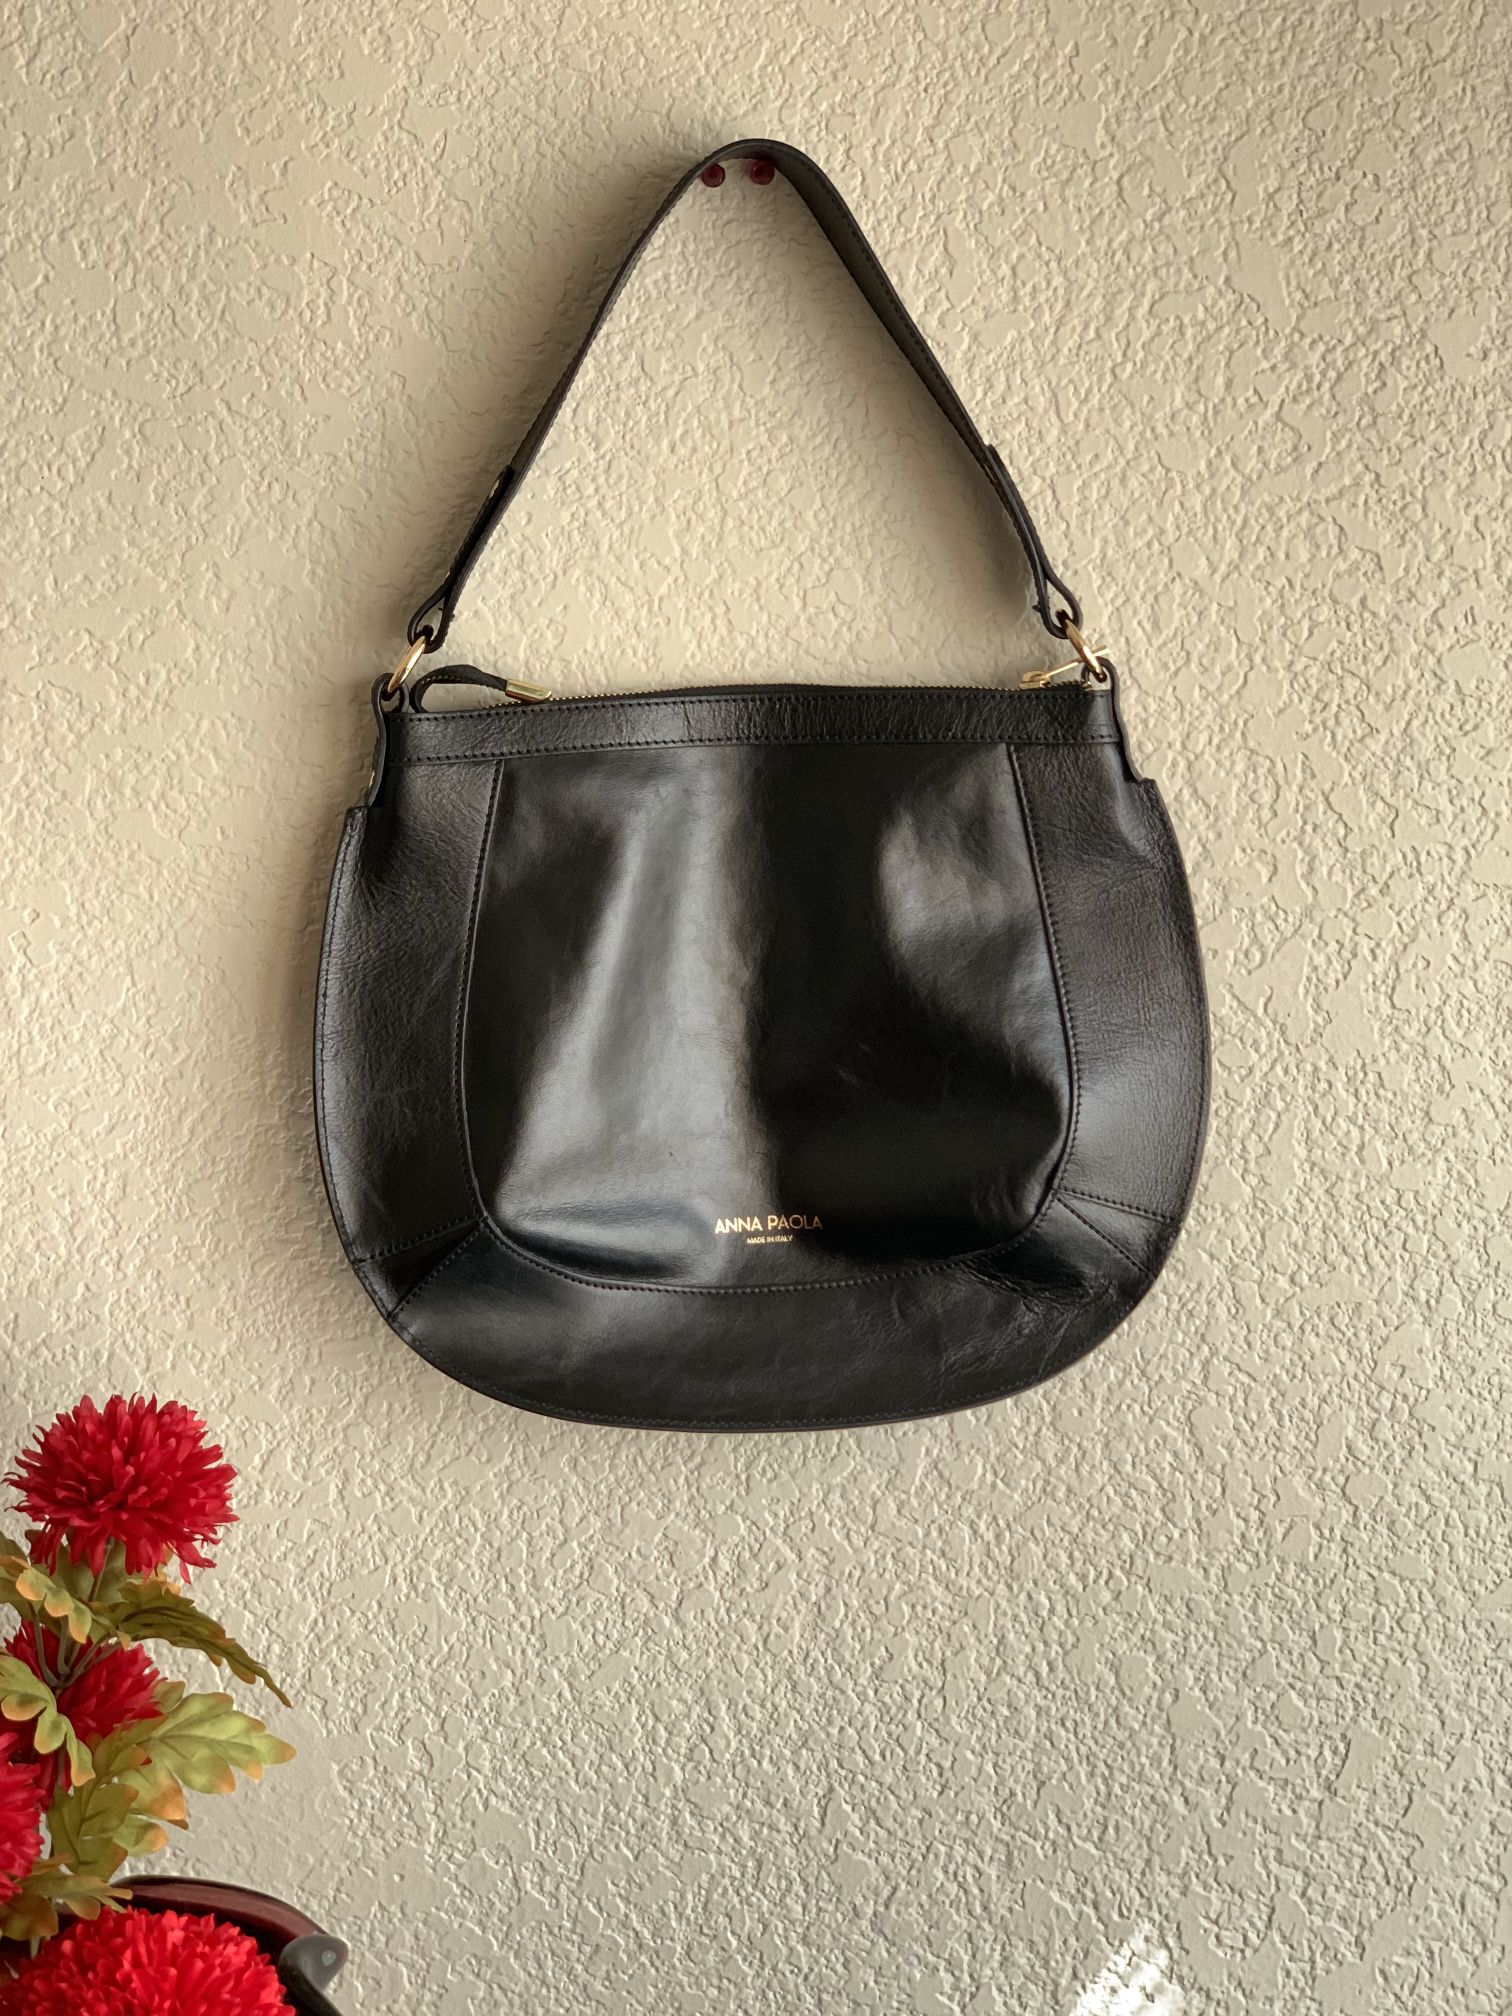 Anna Paola Black Italian Leather Bag HOBO Purse Handbag Italy STUNNING New 